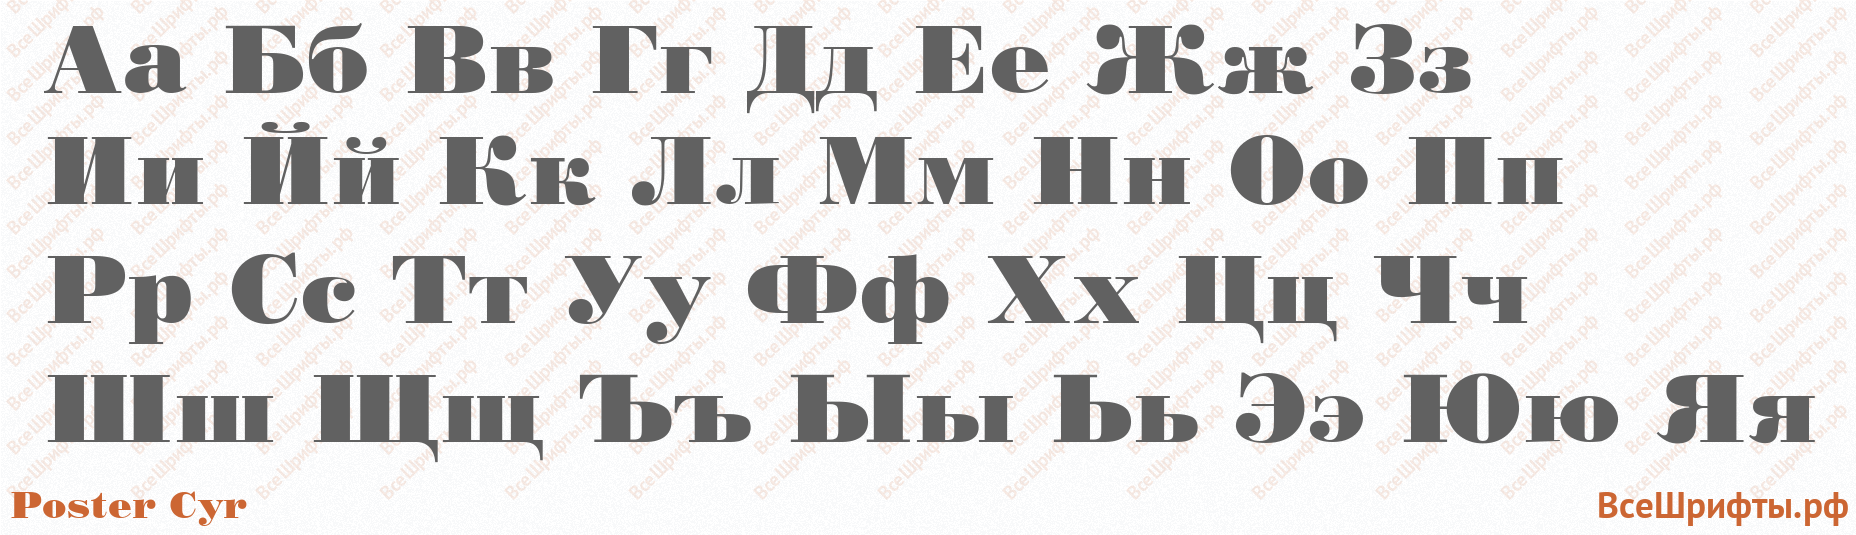 Шрифт Poster Cyr с русскими буквами